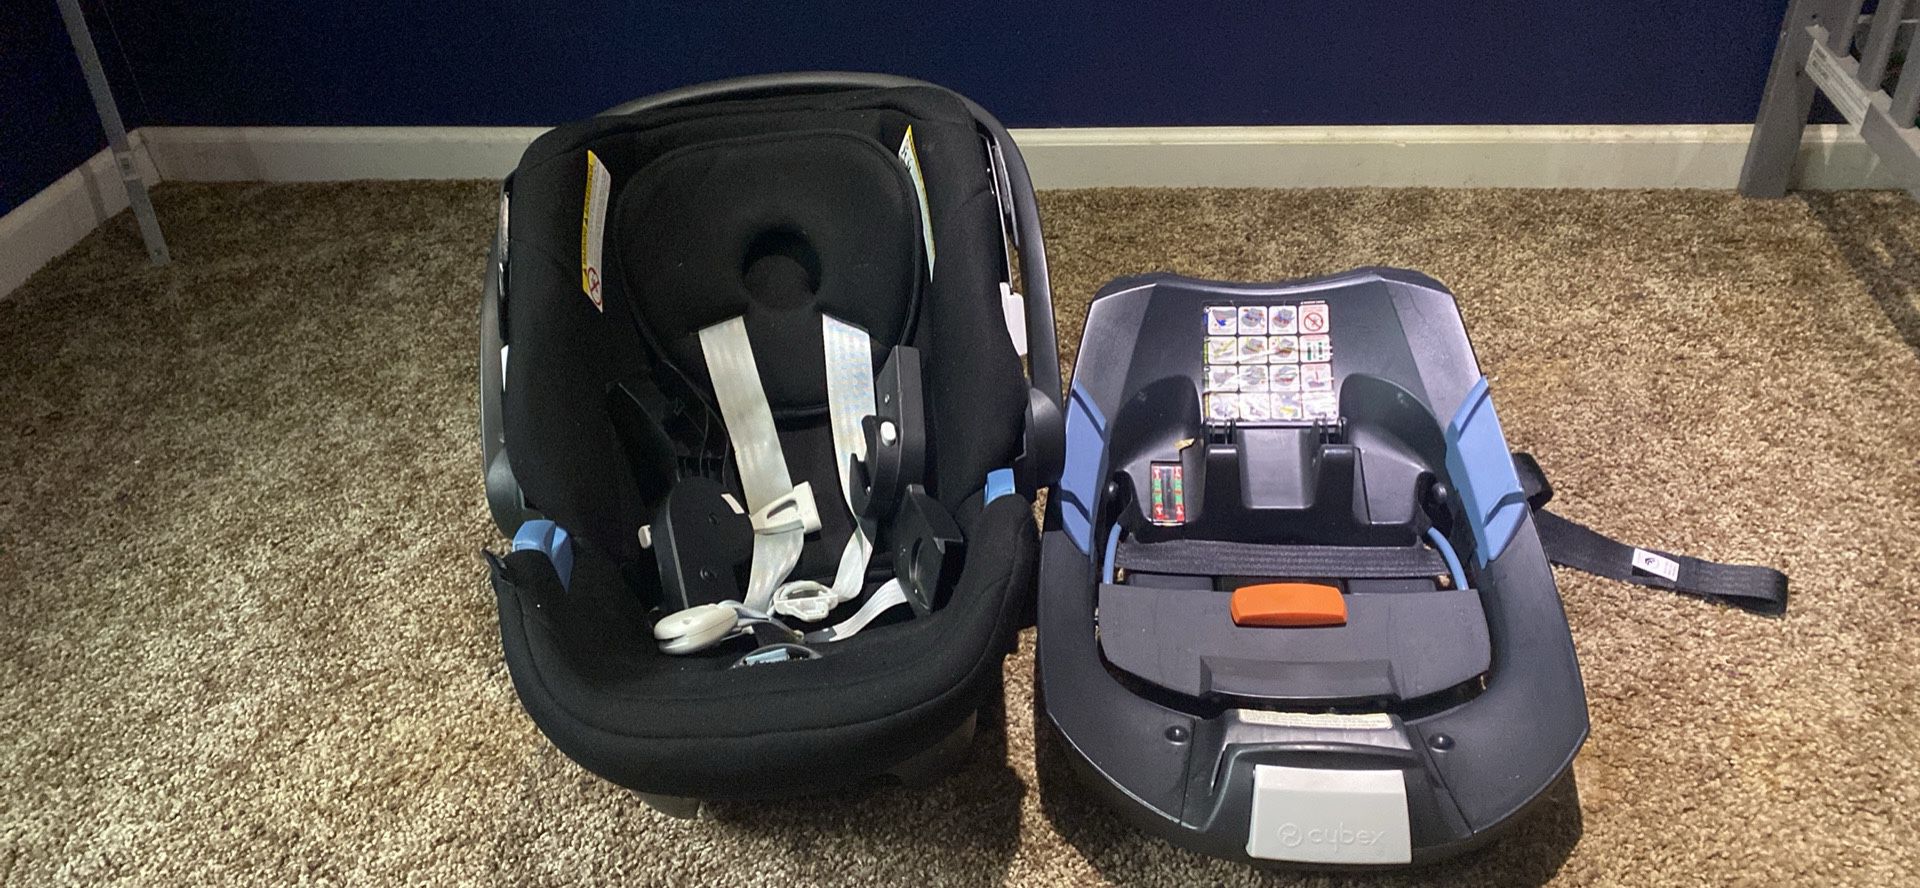 Cybex Car seat & Stroller Set. 